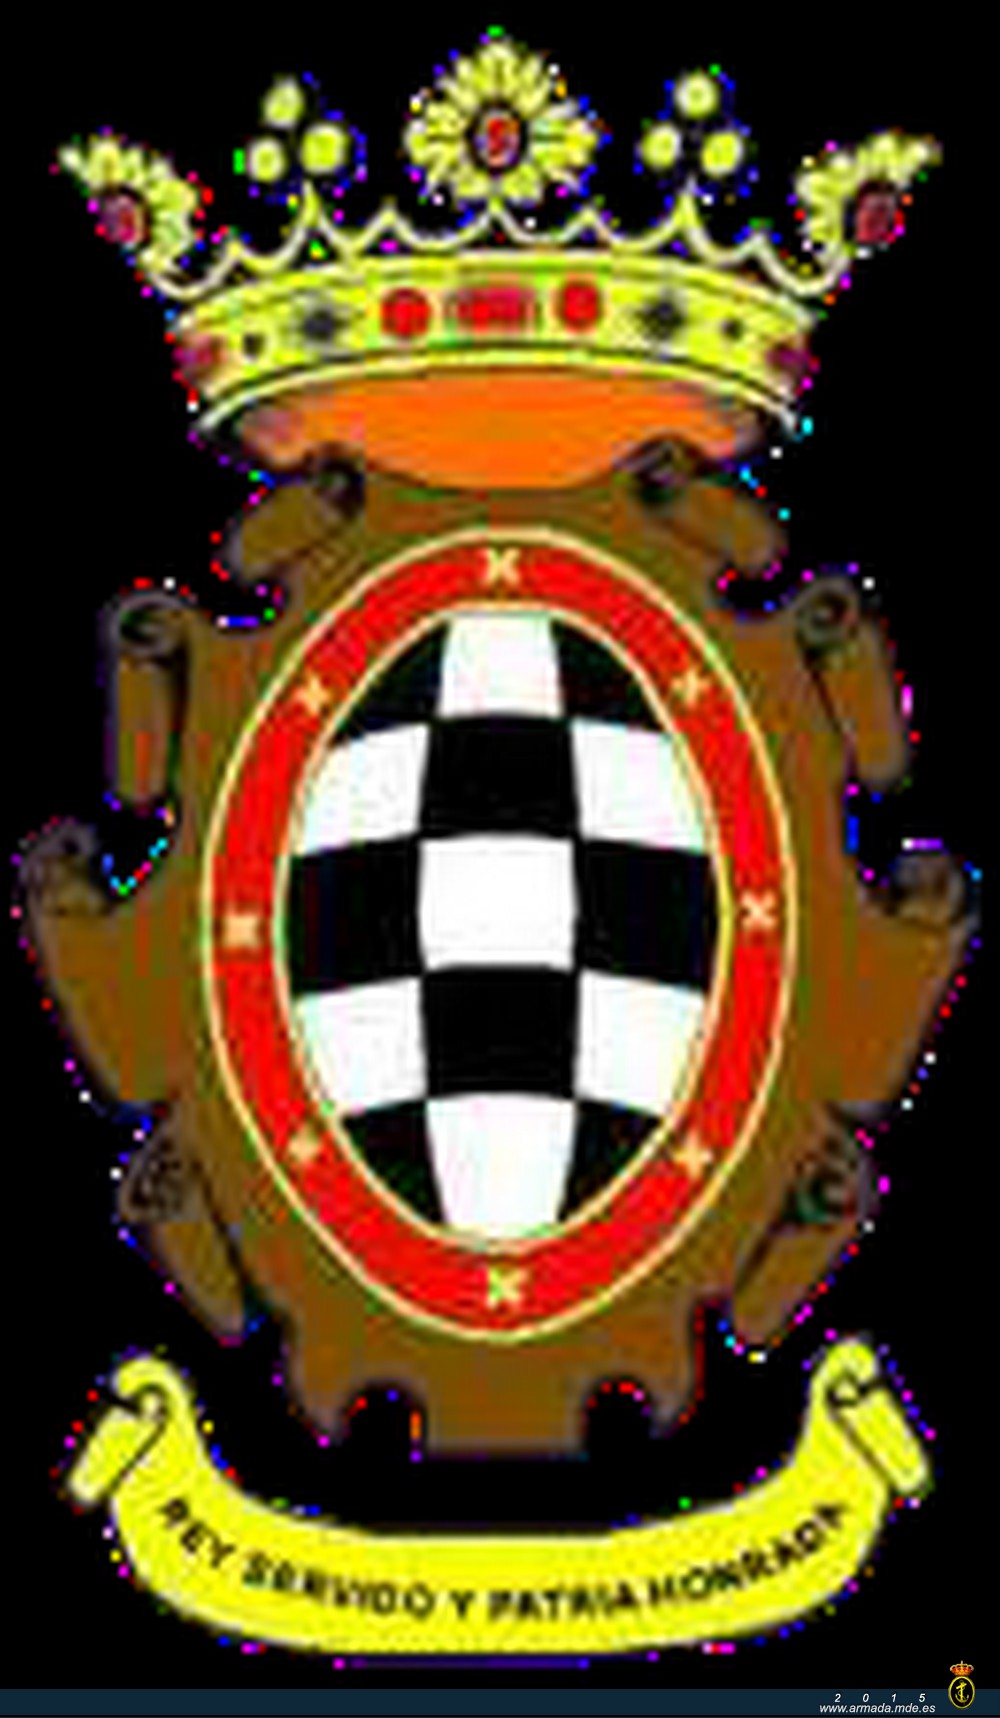 Su escudo adopta como base el escudo familiar de D.
Álvaro de Bazán